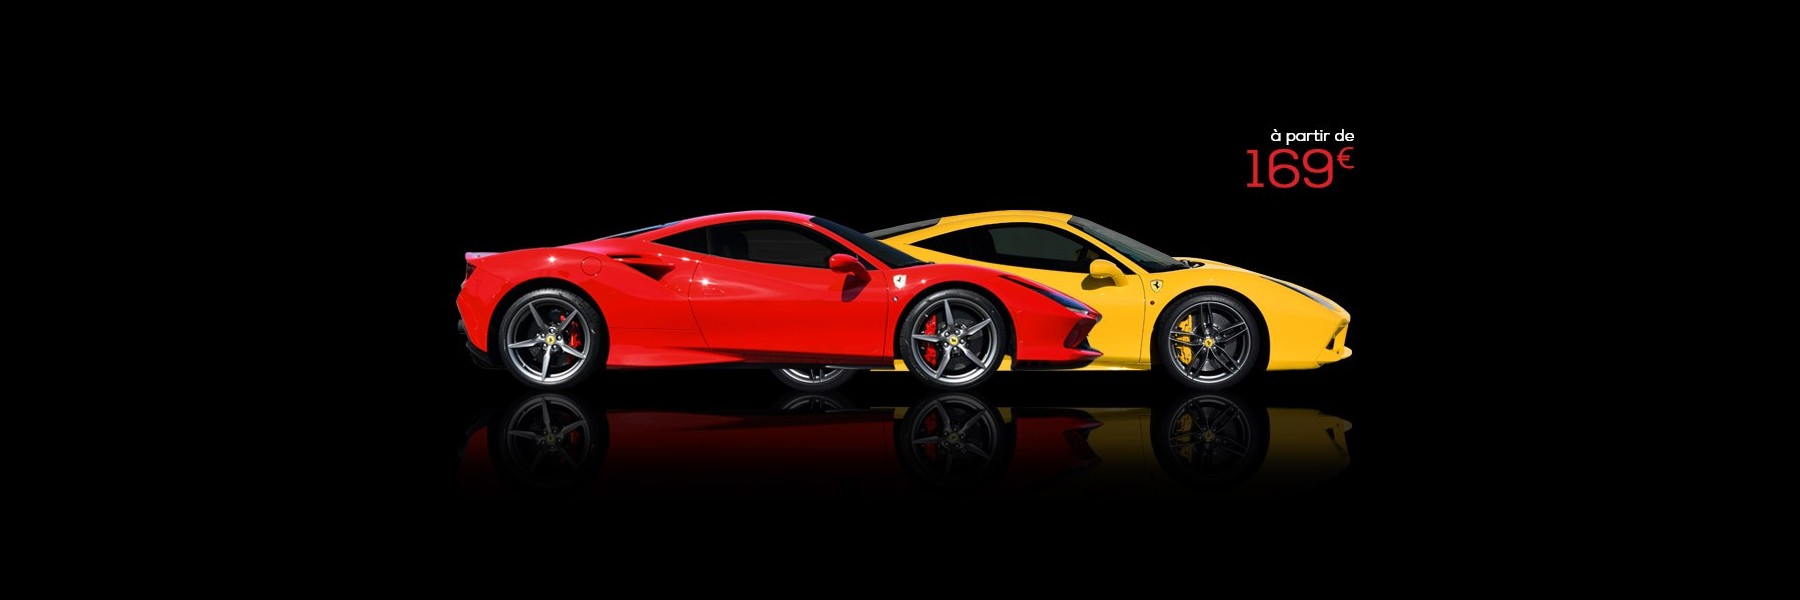 Ferrari driving experience